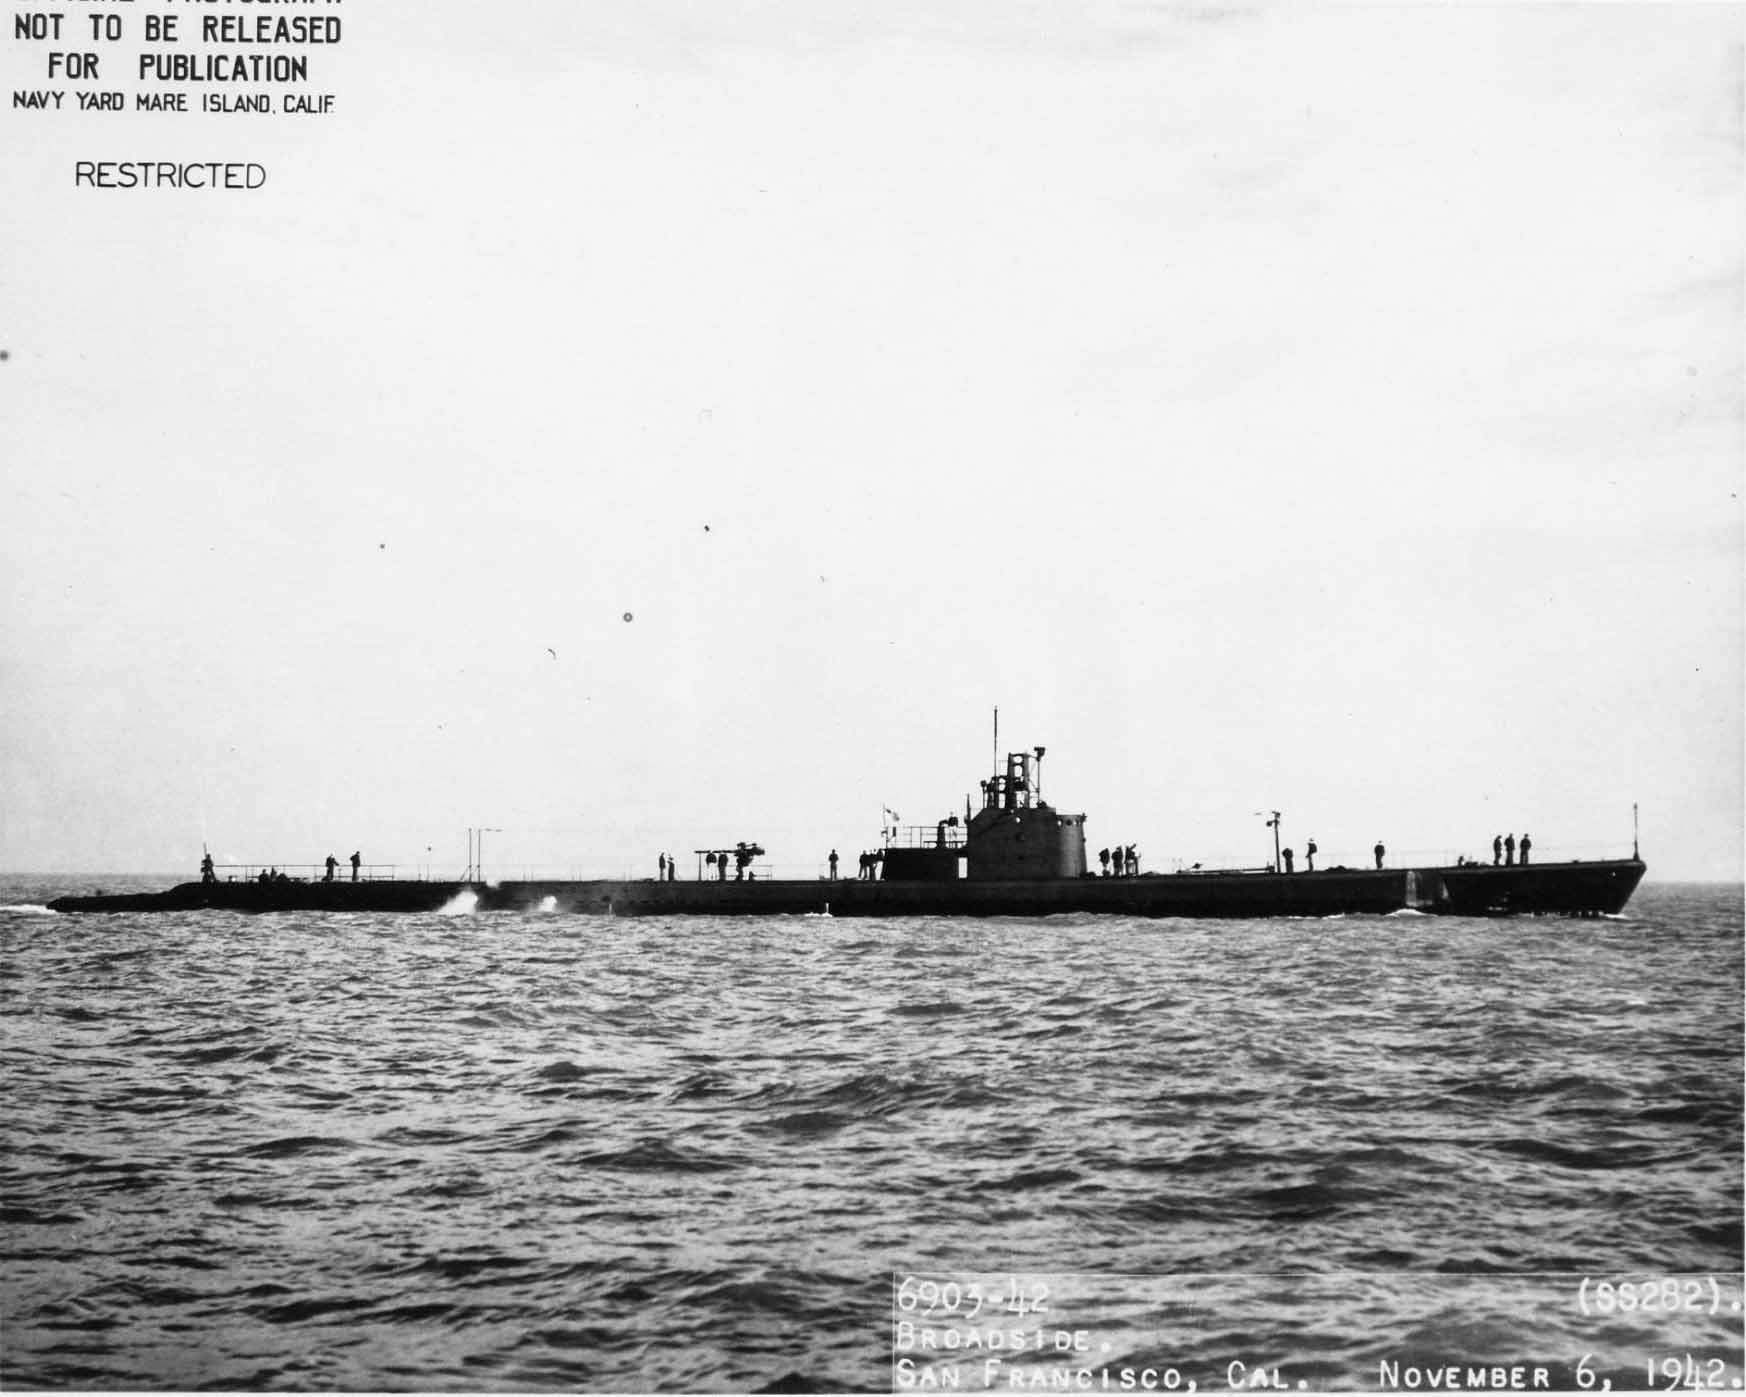 USS Tunny off Mare Island Naval Shipyard, Vallejo, California, United States, 6 Nov 1942